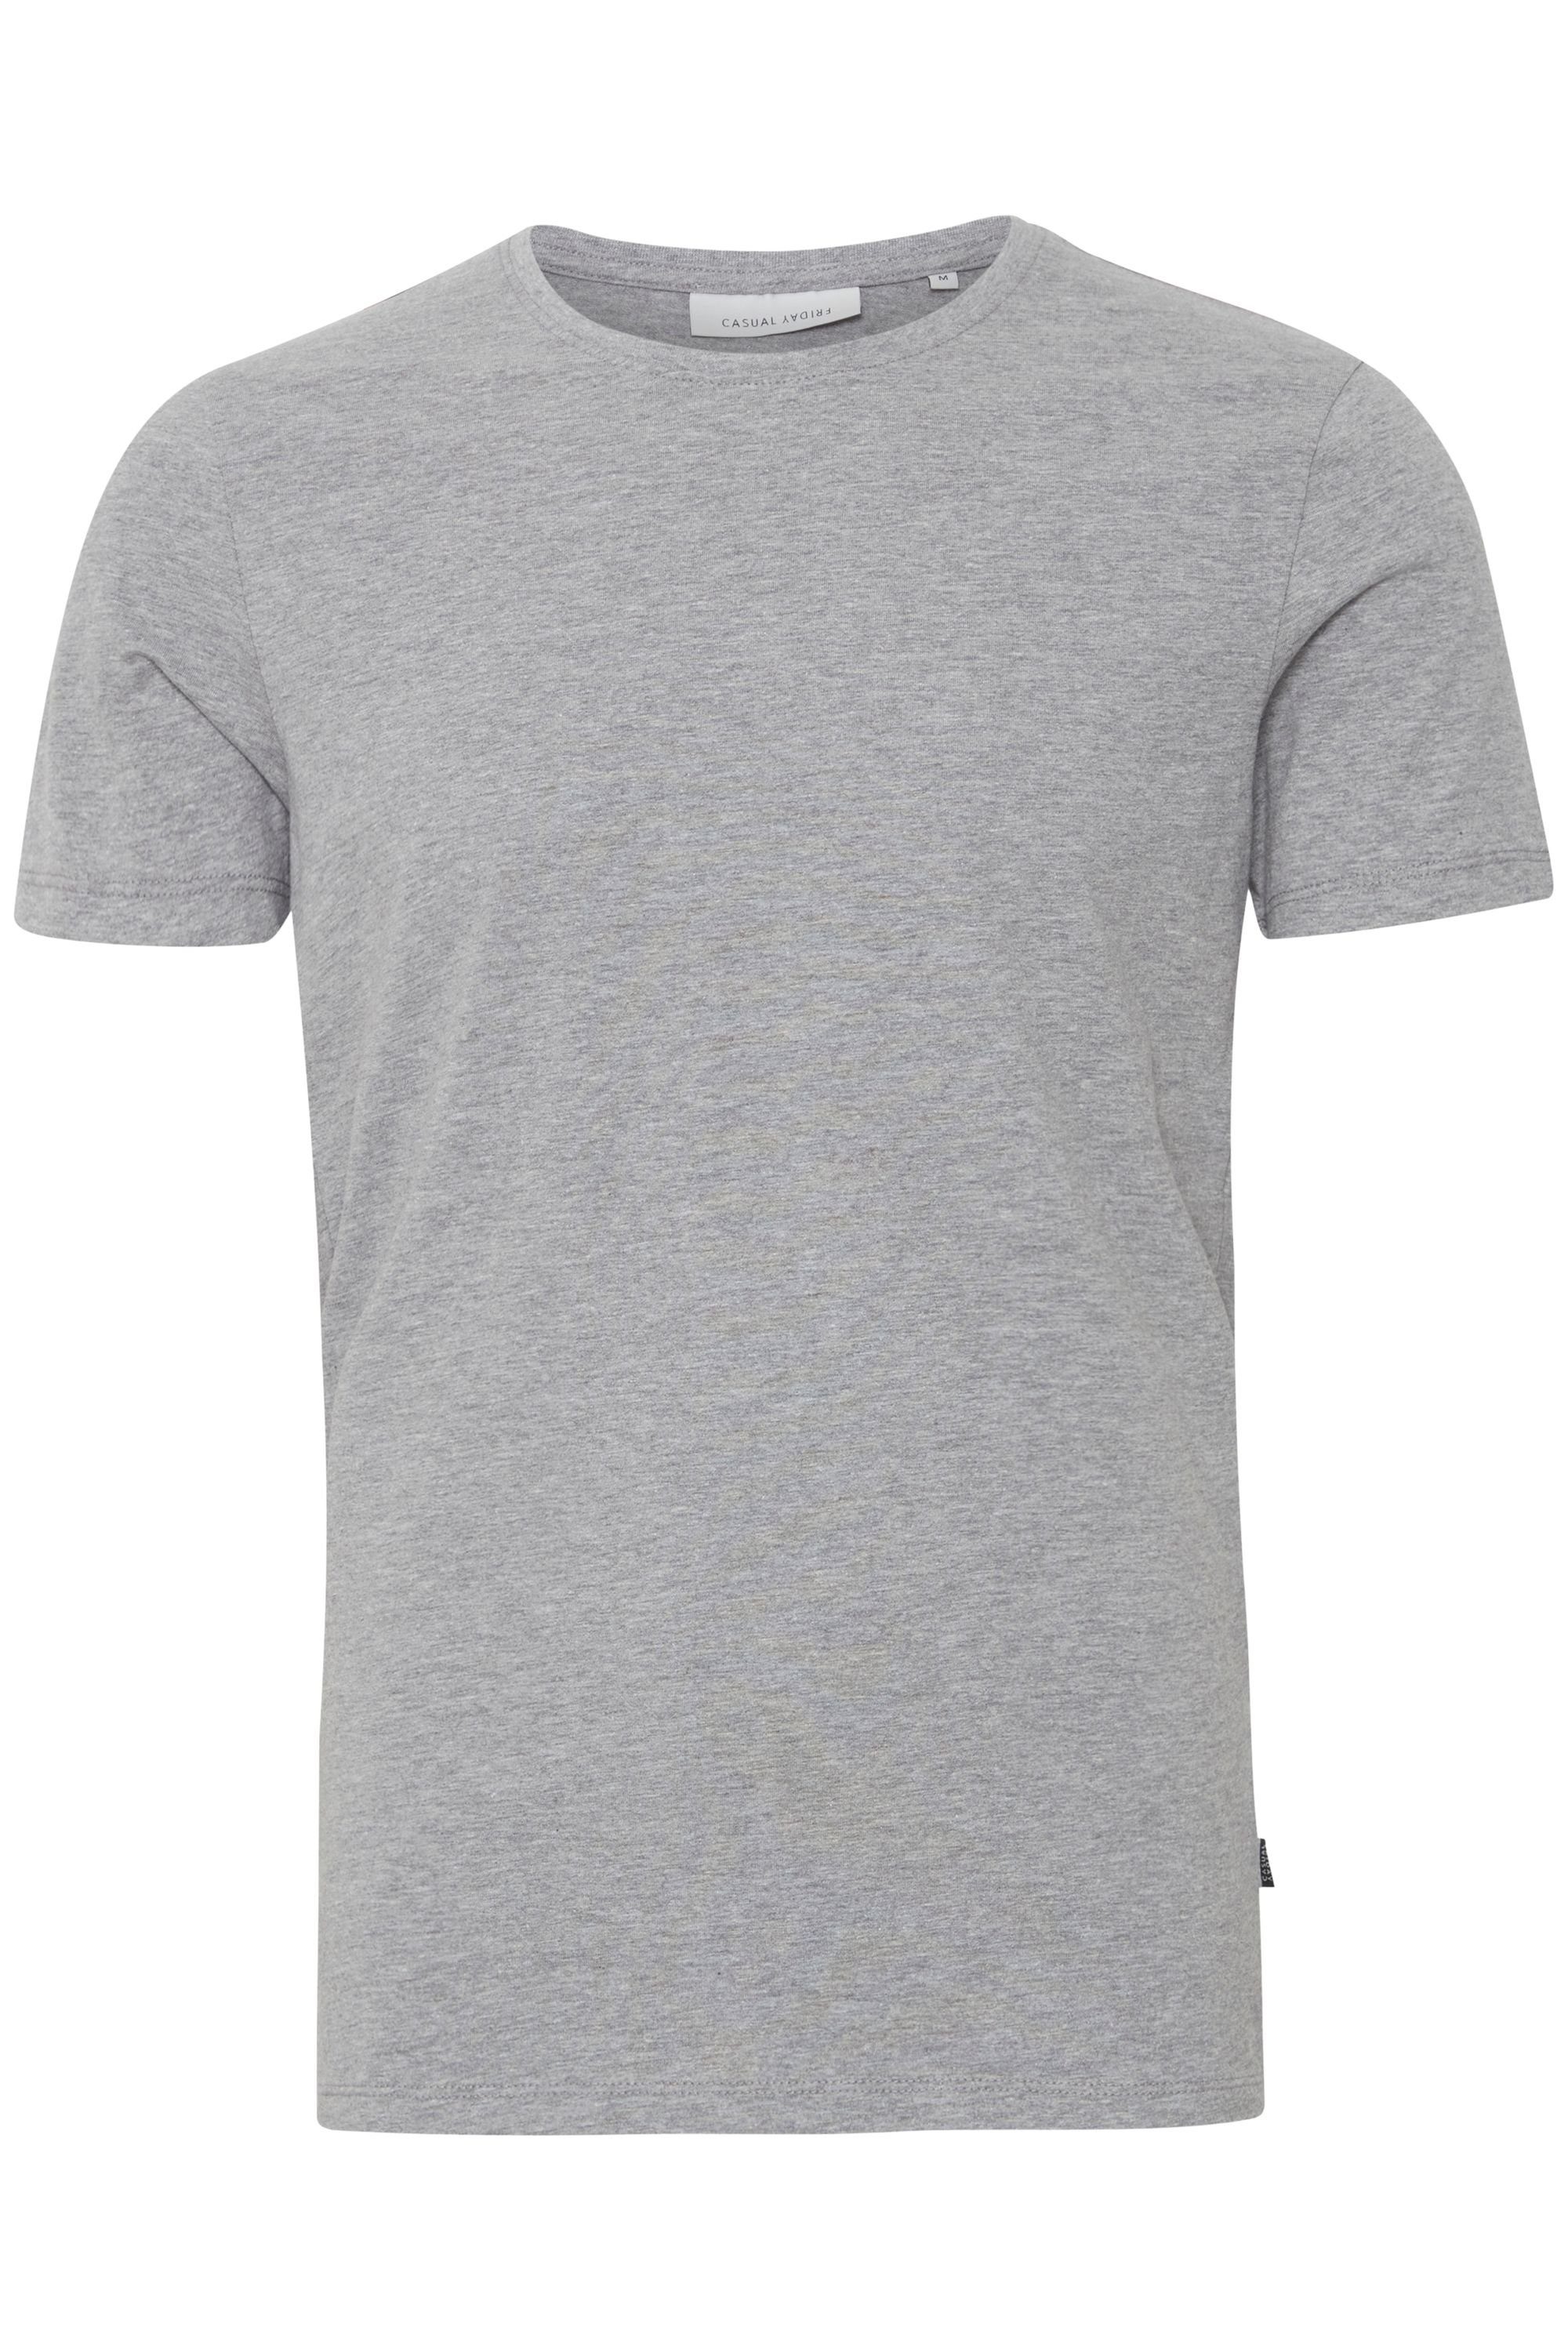 CFDavid - (50813) 20503063 T-Shirt Casual Friday Light melange grey